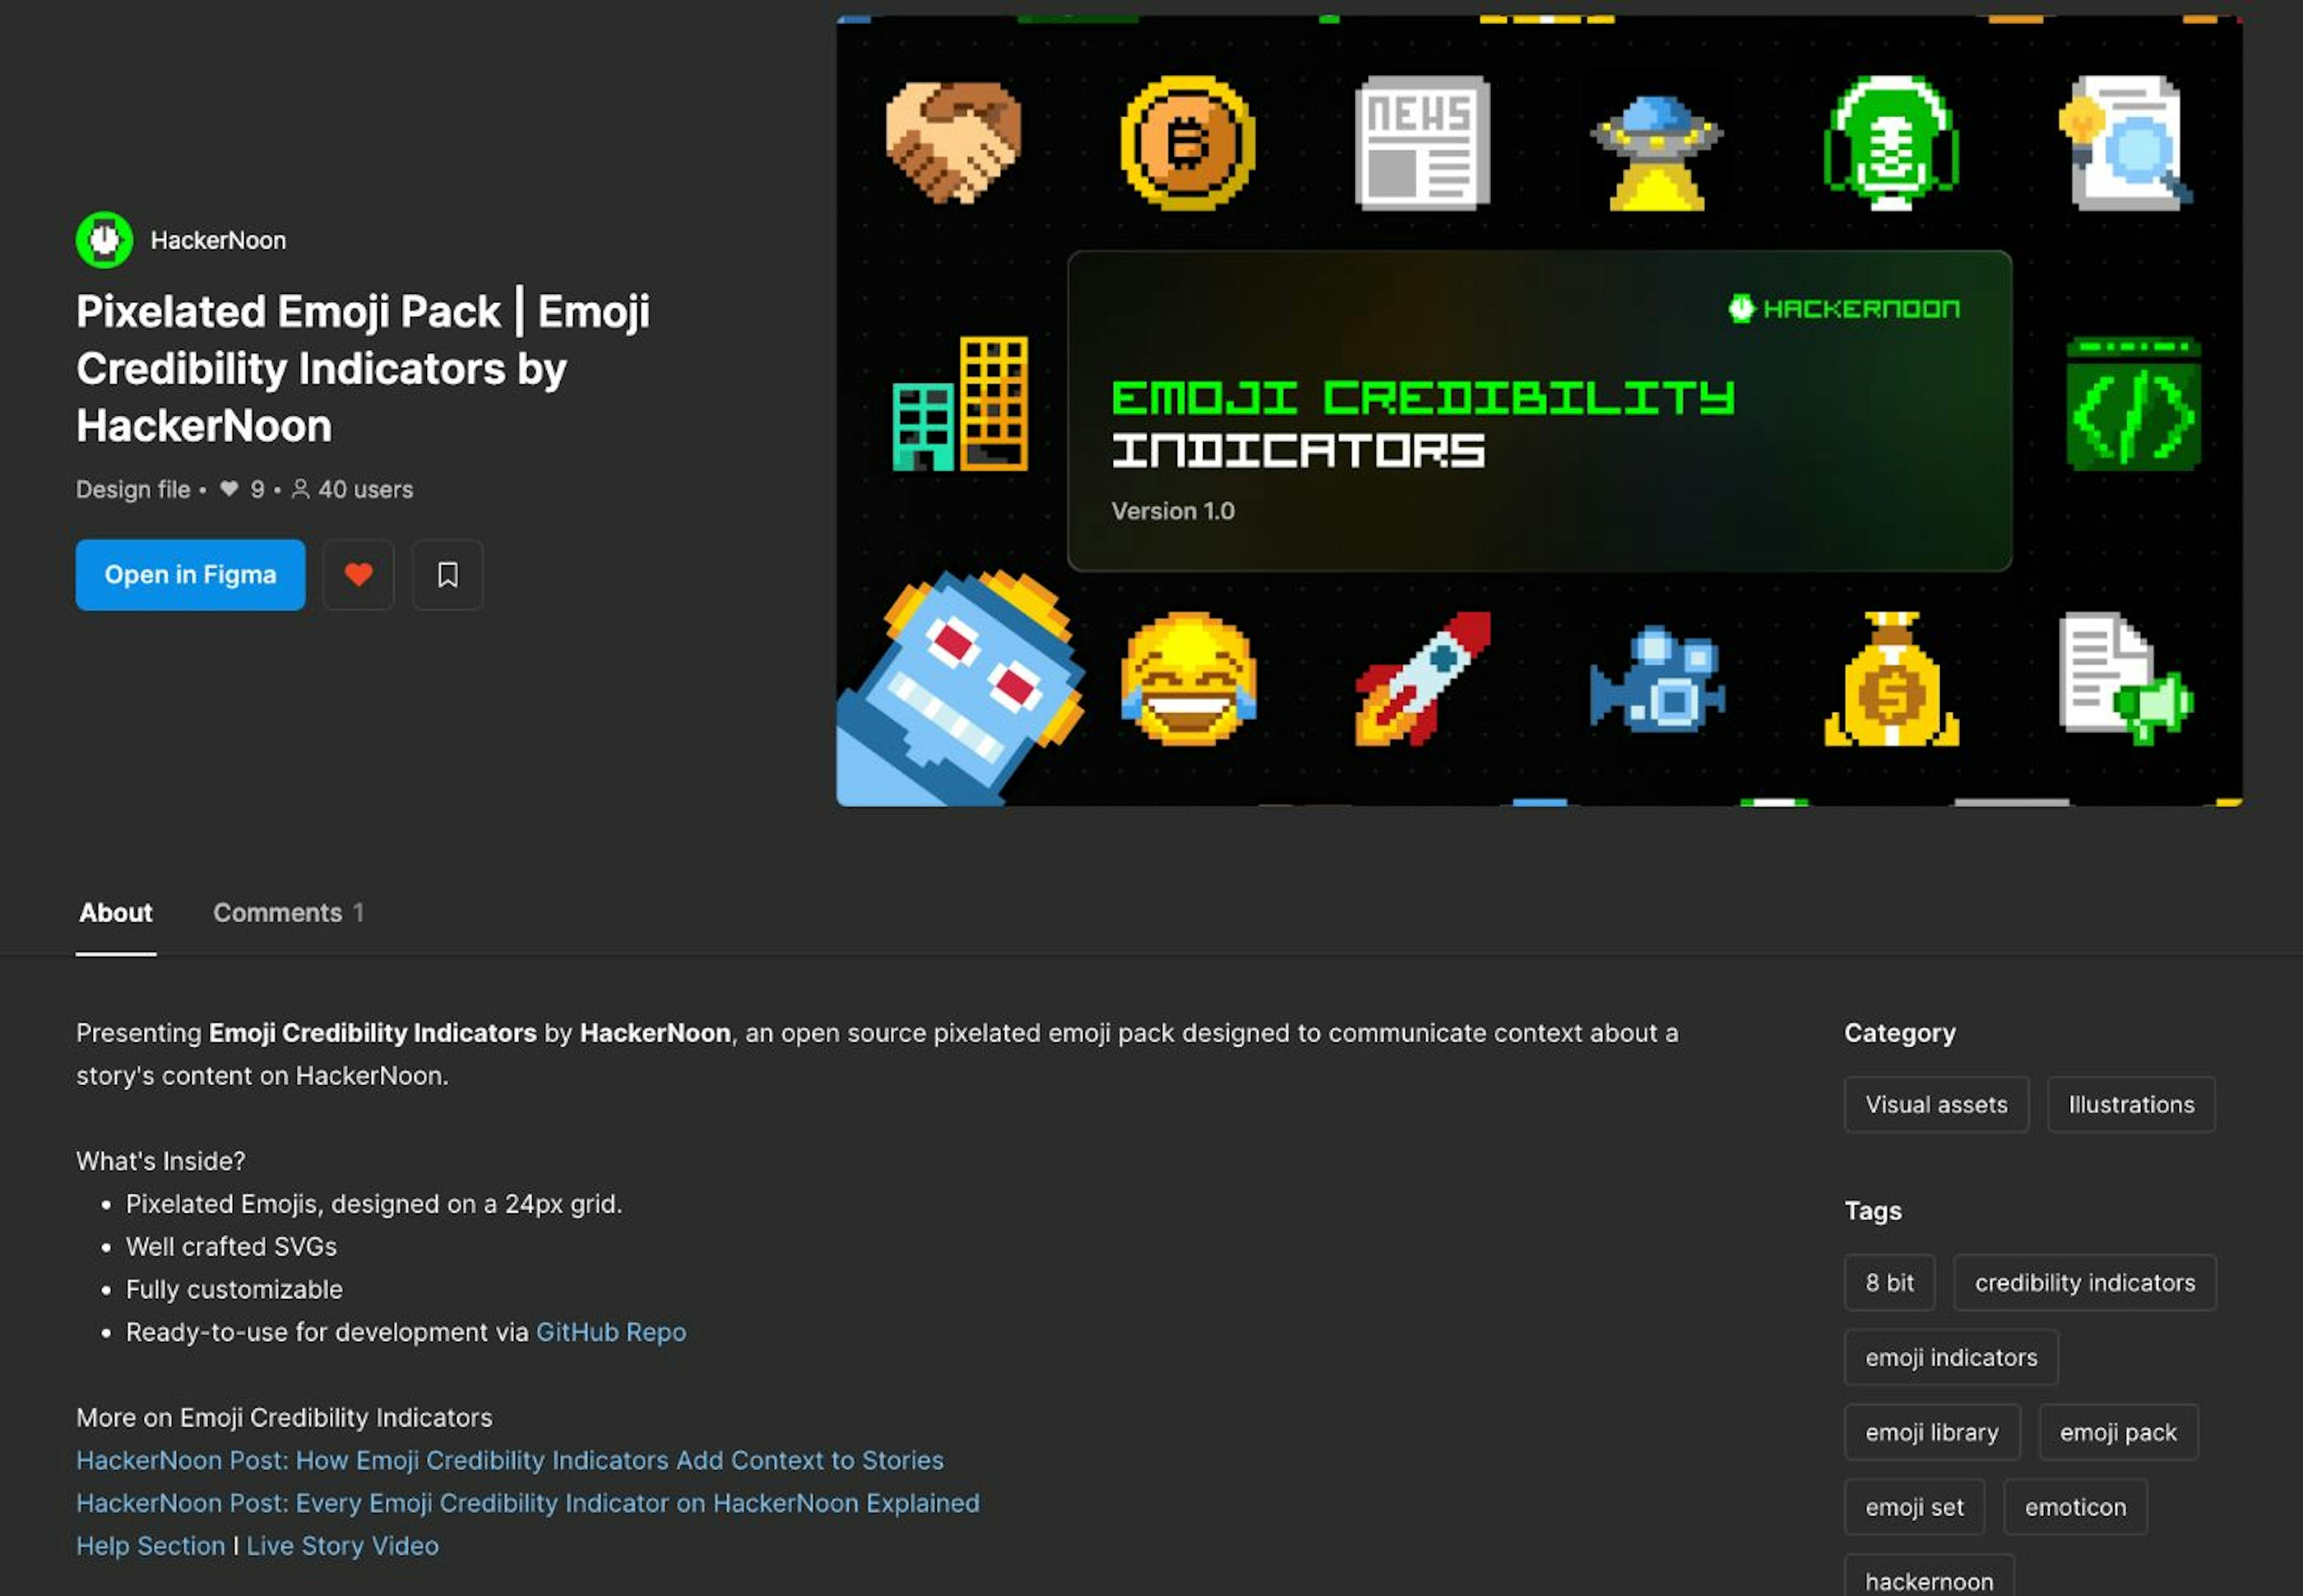 HackerNoon's Pixelated Emoji Pack on Figma!